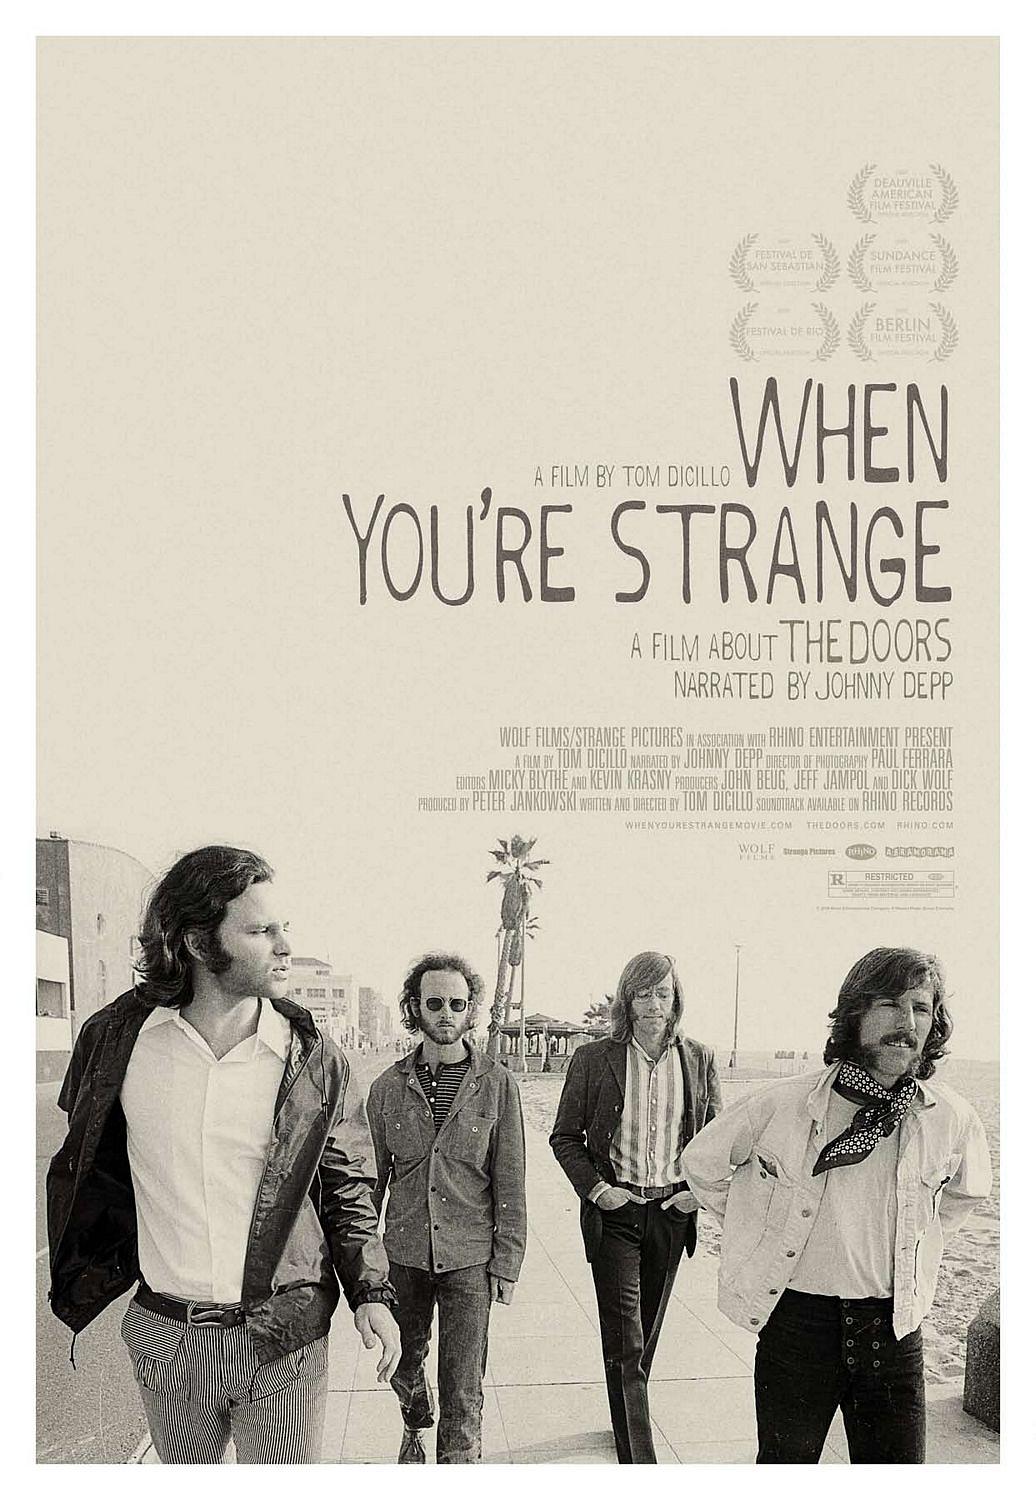 当你感觉陌生/当你还是陌生人时 When.Youre.Strange.A.Film.About.The.Doors.2009.1080p.BluRay.x264-SEMTEX 8.72GB-1.png